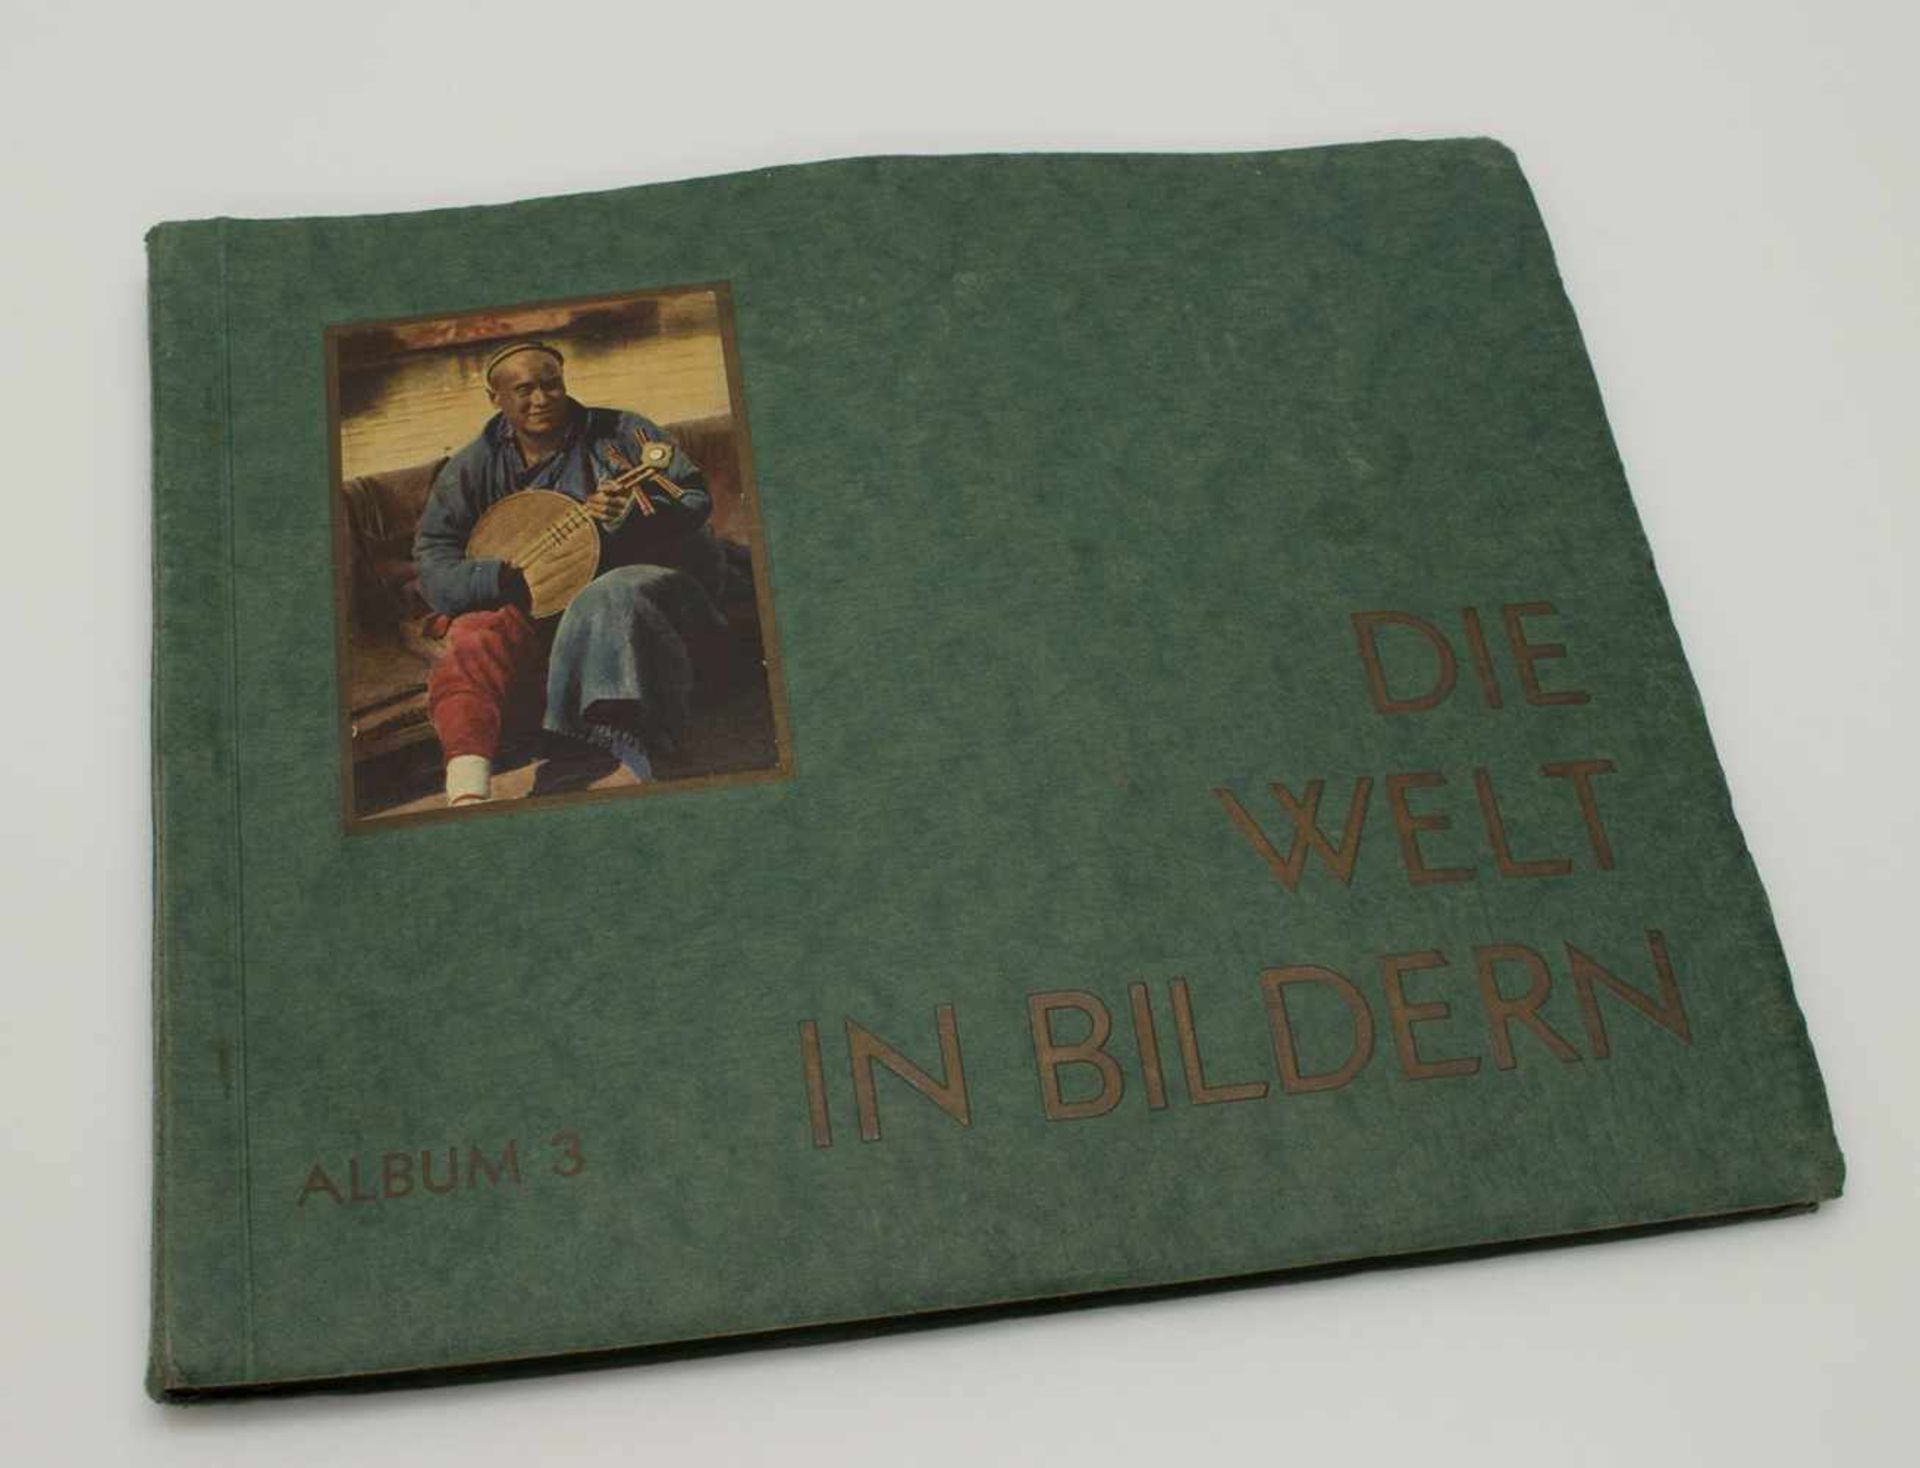 Zigarettenbilderalbum„Die Welt in Bildern“, Album Nr. 3, Jasmati & Constantin Zigaretten, komplett